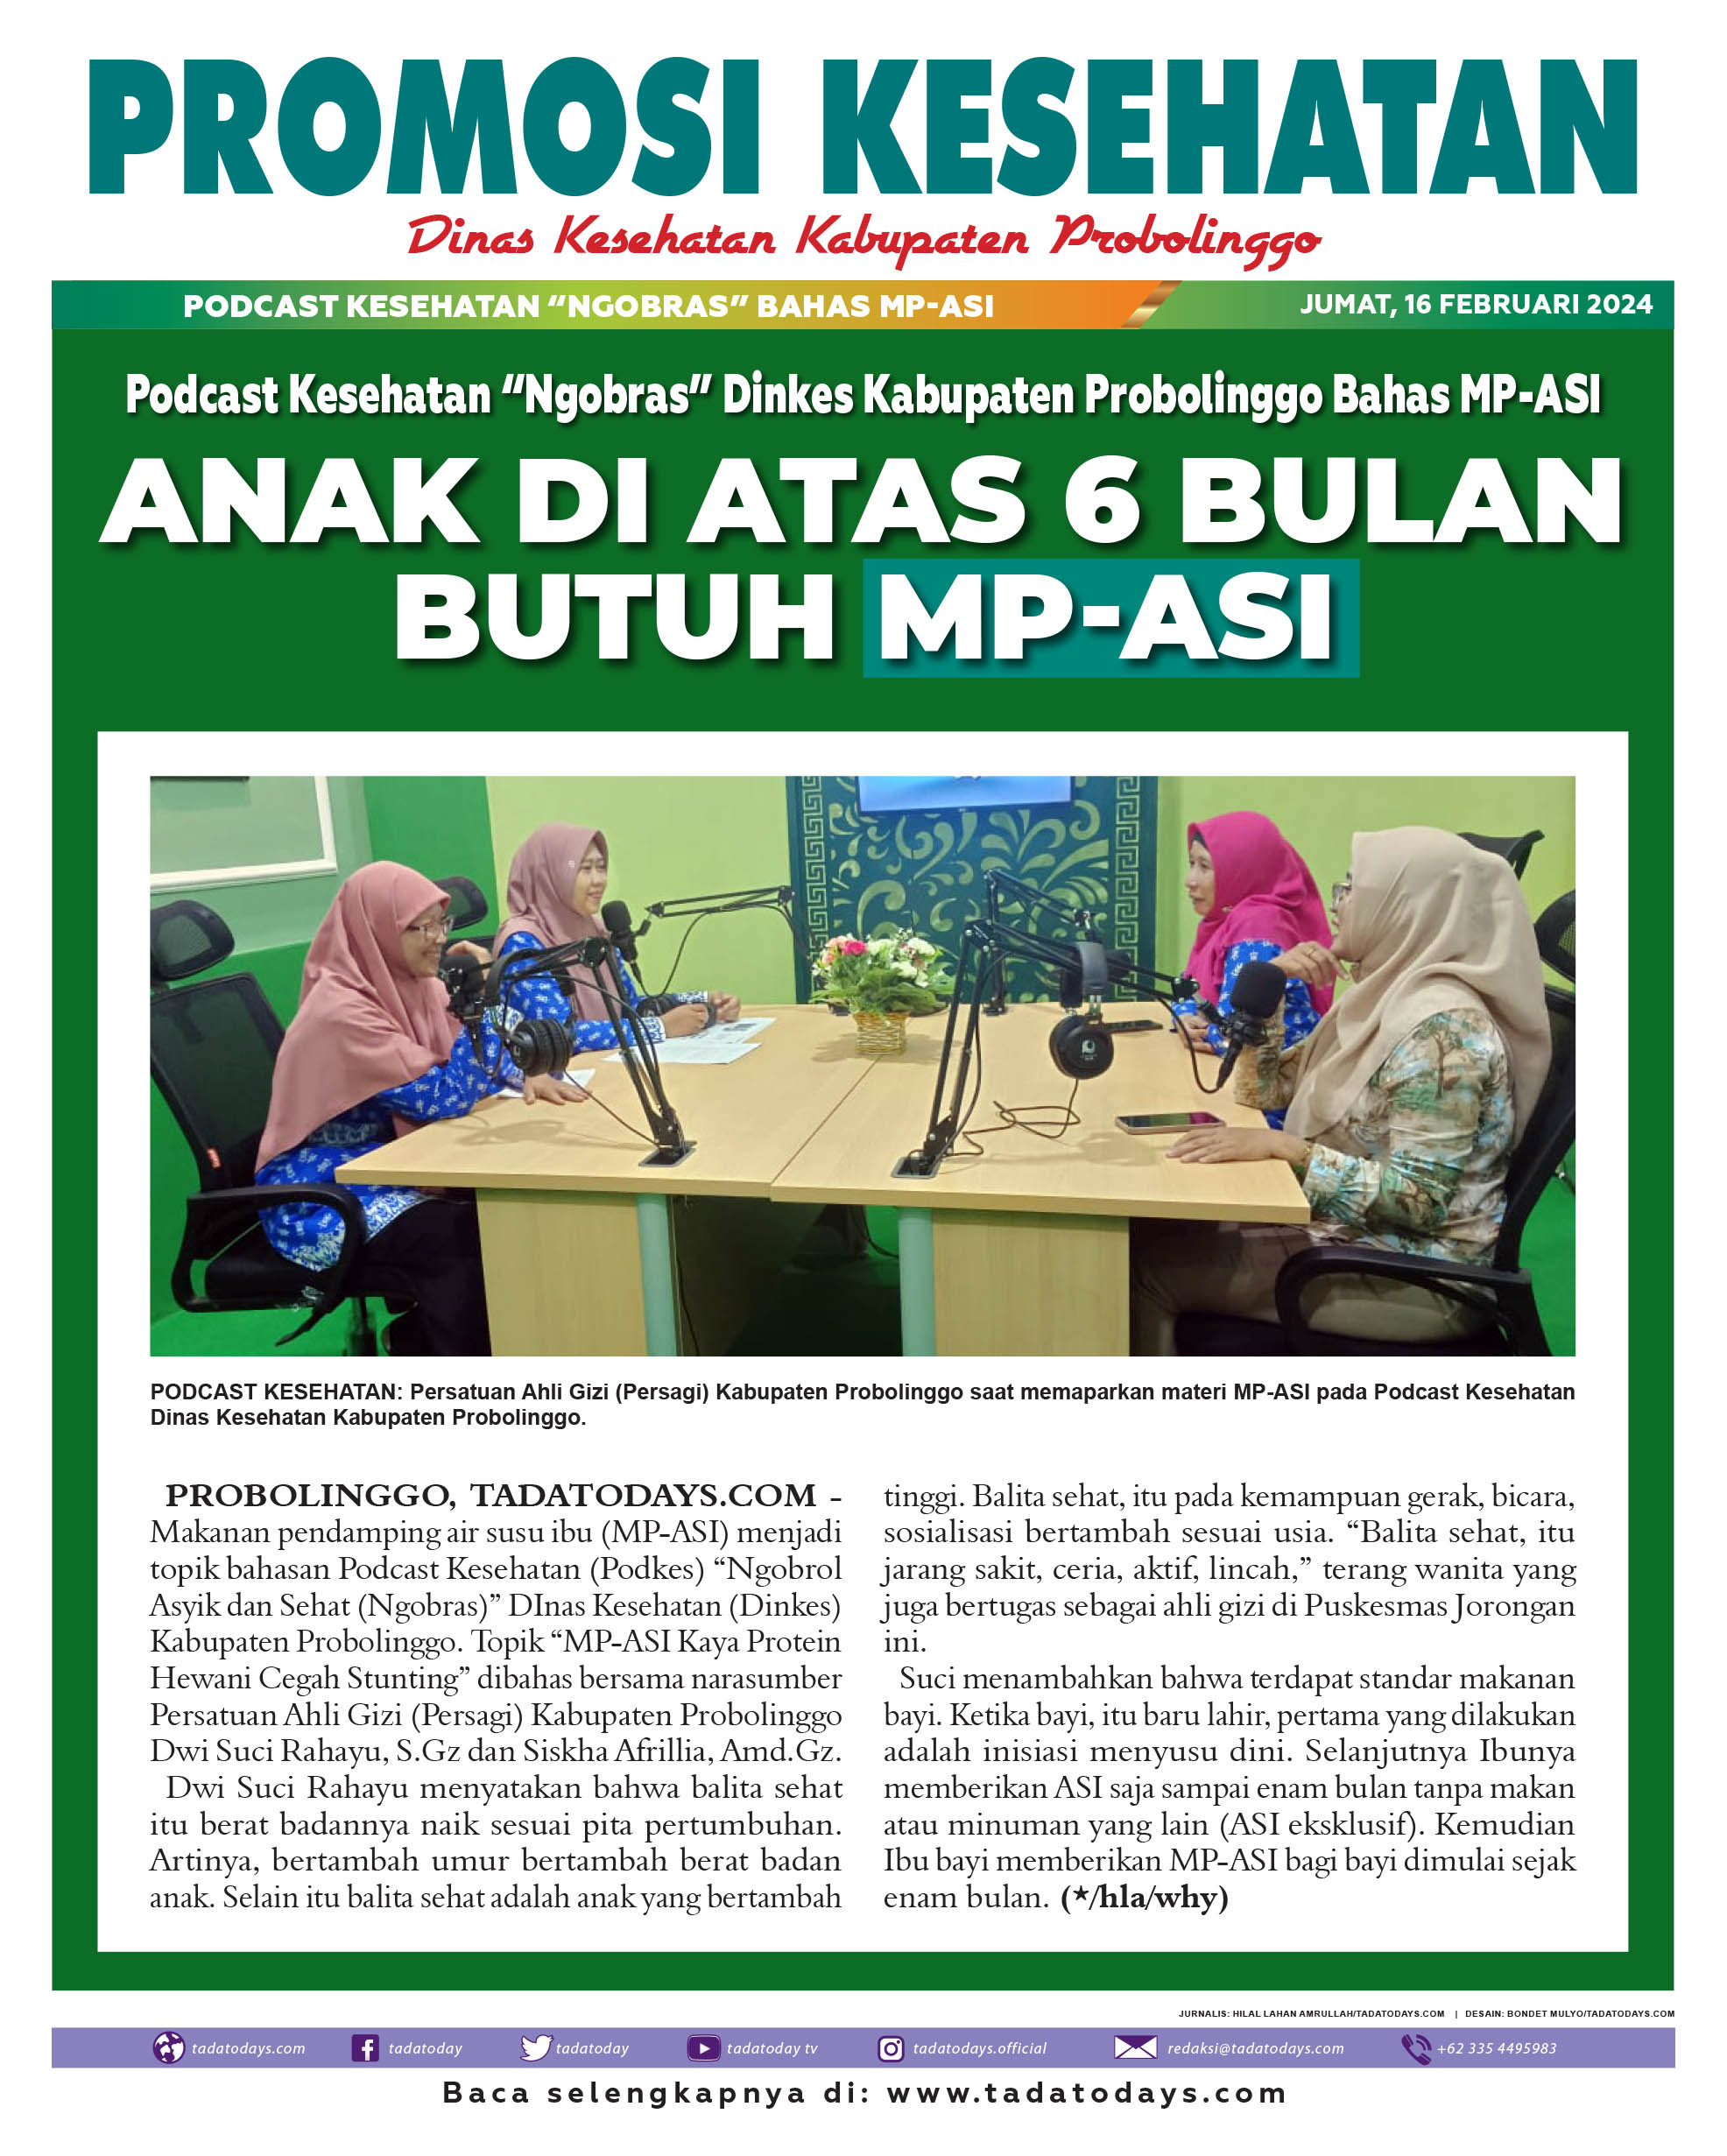 Podcast Kesehatan “Ngobras” Dinkes Kabupaten Probolinggo Membahas MP-ASI